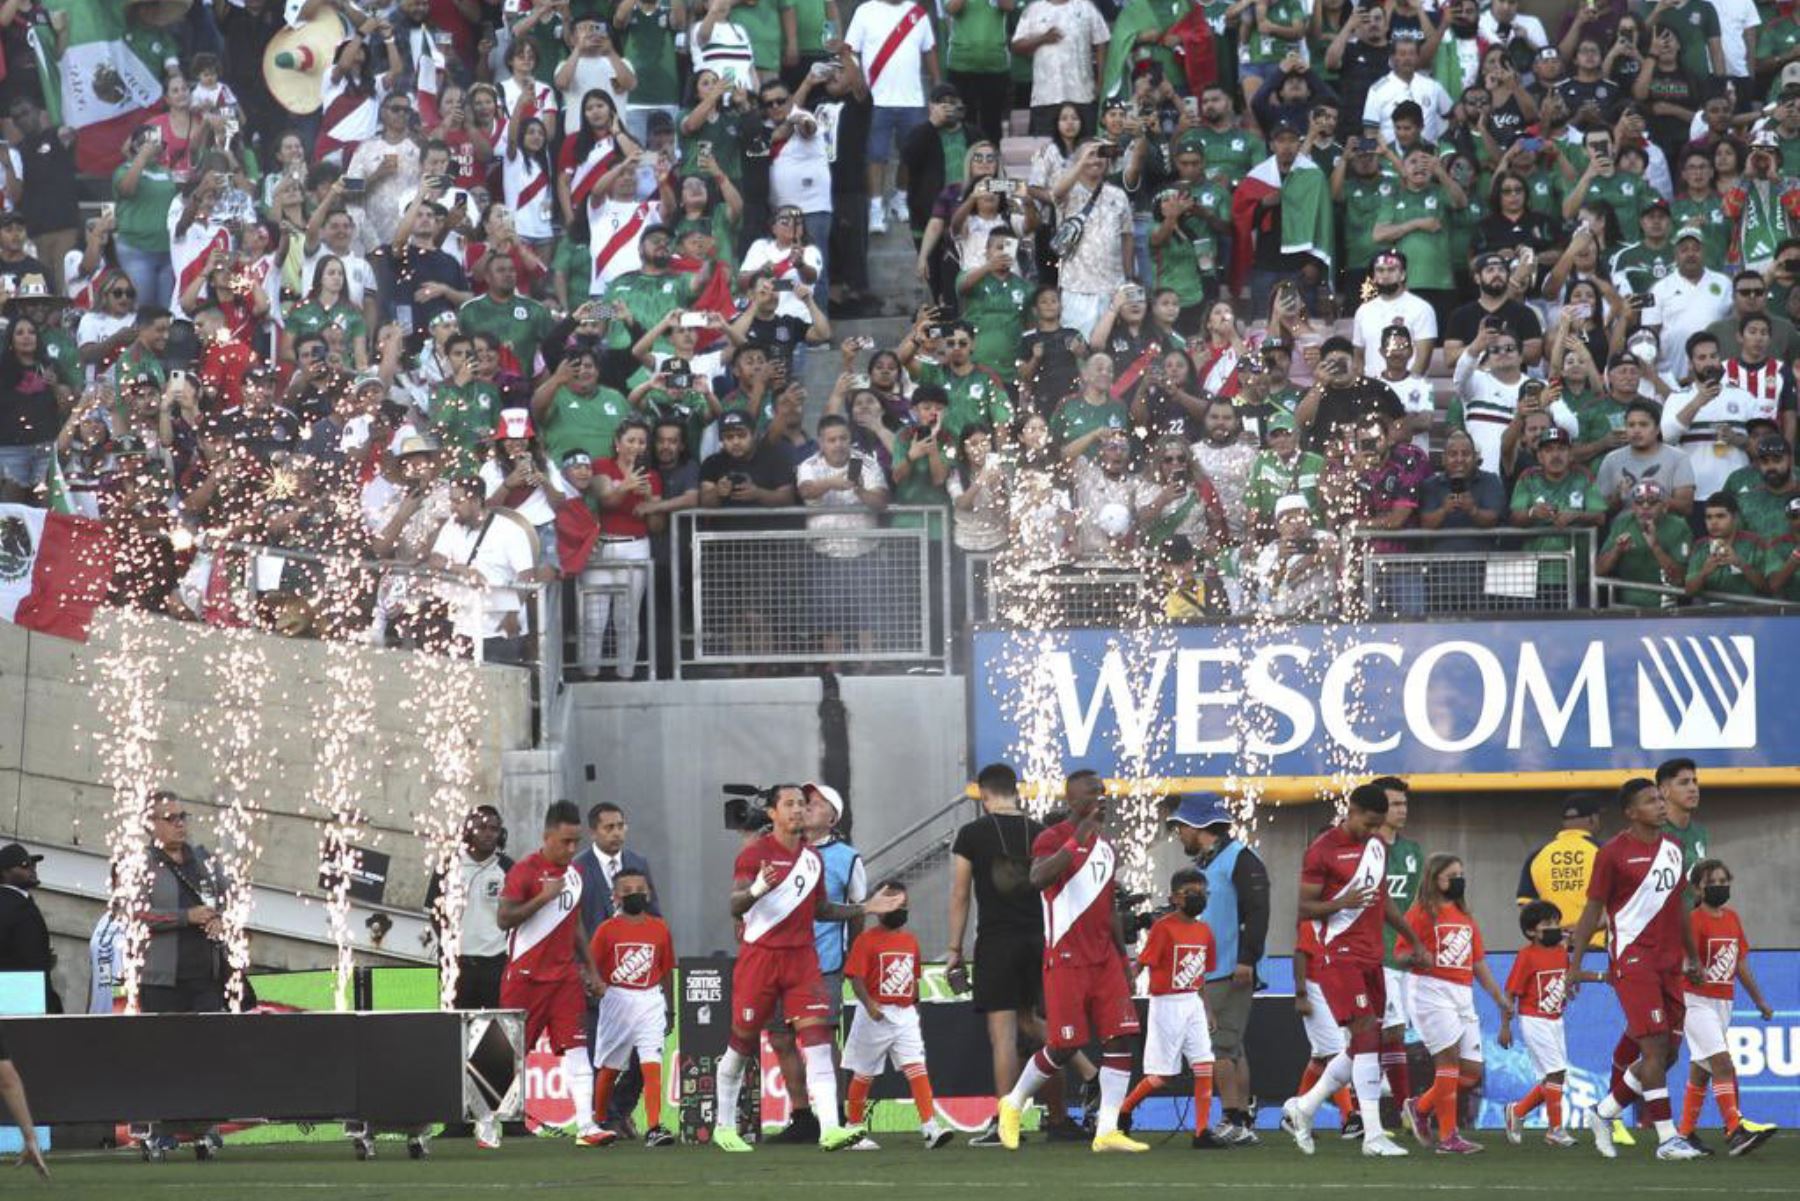 Perú enfrenta a México en partido amistoso que se disputa en el Rose Bowl Stadium de Pasadena, en California, Estados Unidos. Foto: FPF